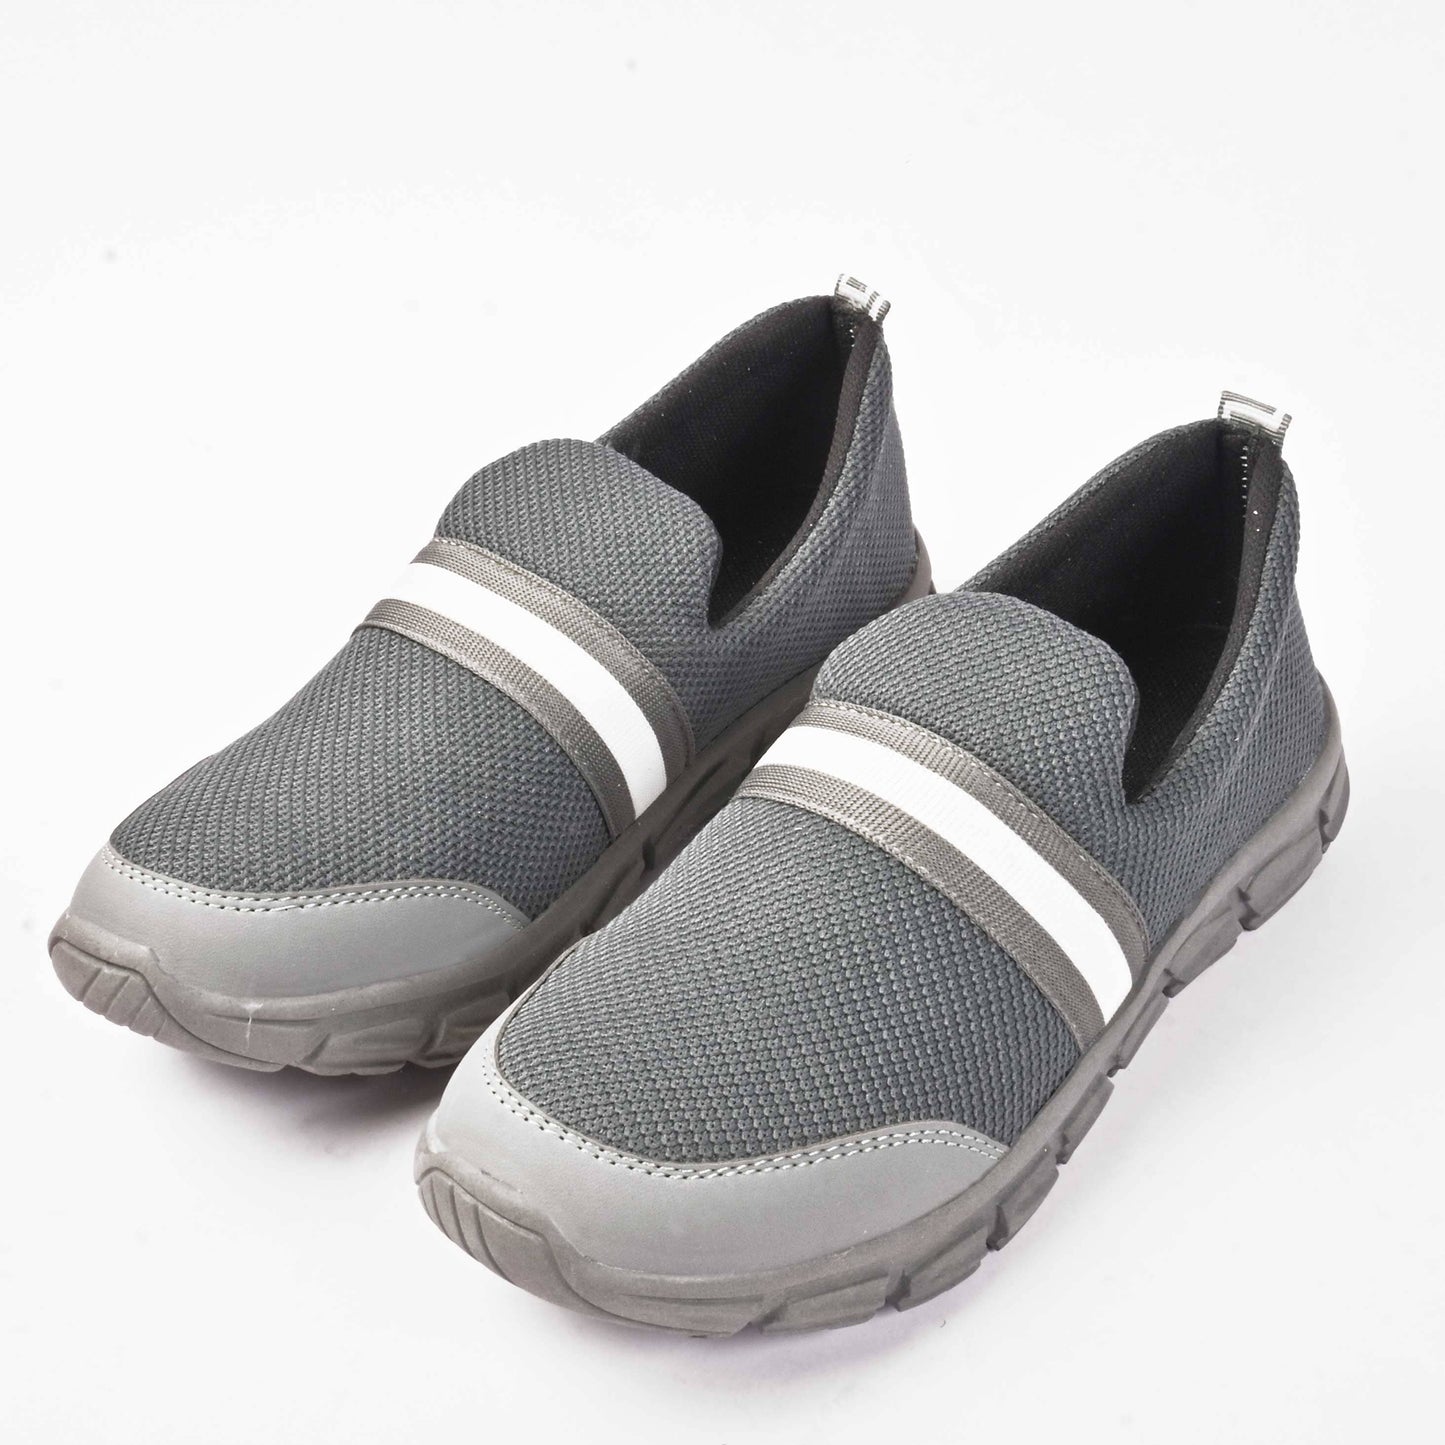 MR Men's Athletic Works Slip On Joggers Men's Shoes SNAN Traders Grey EUR 39 